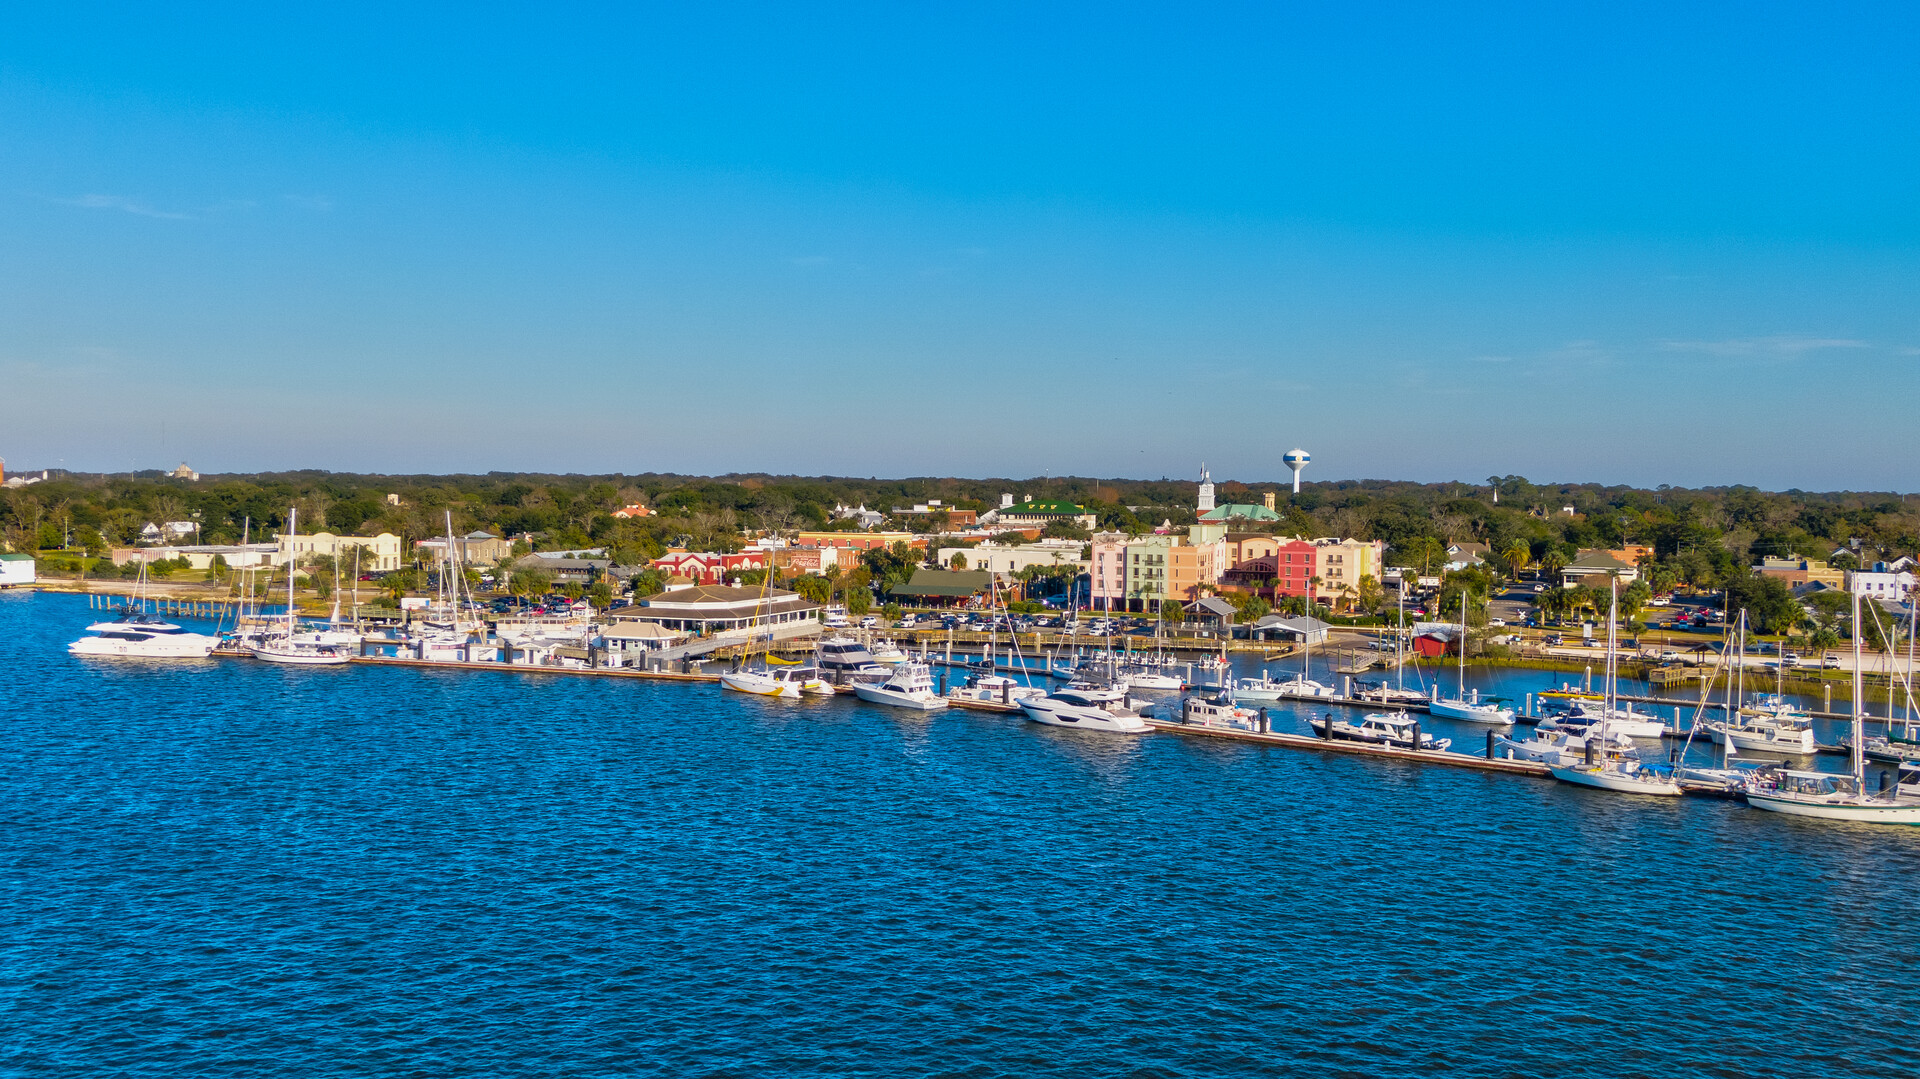 Fernandina Harbor Marina - Aerial - Florida Marina - Marinalife